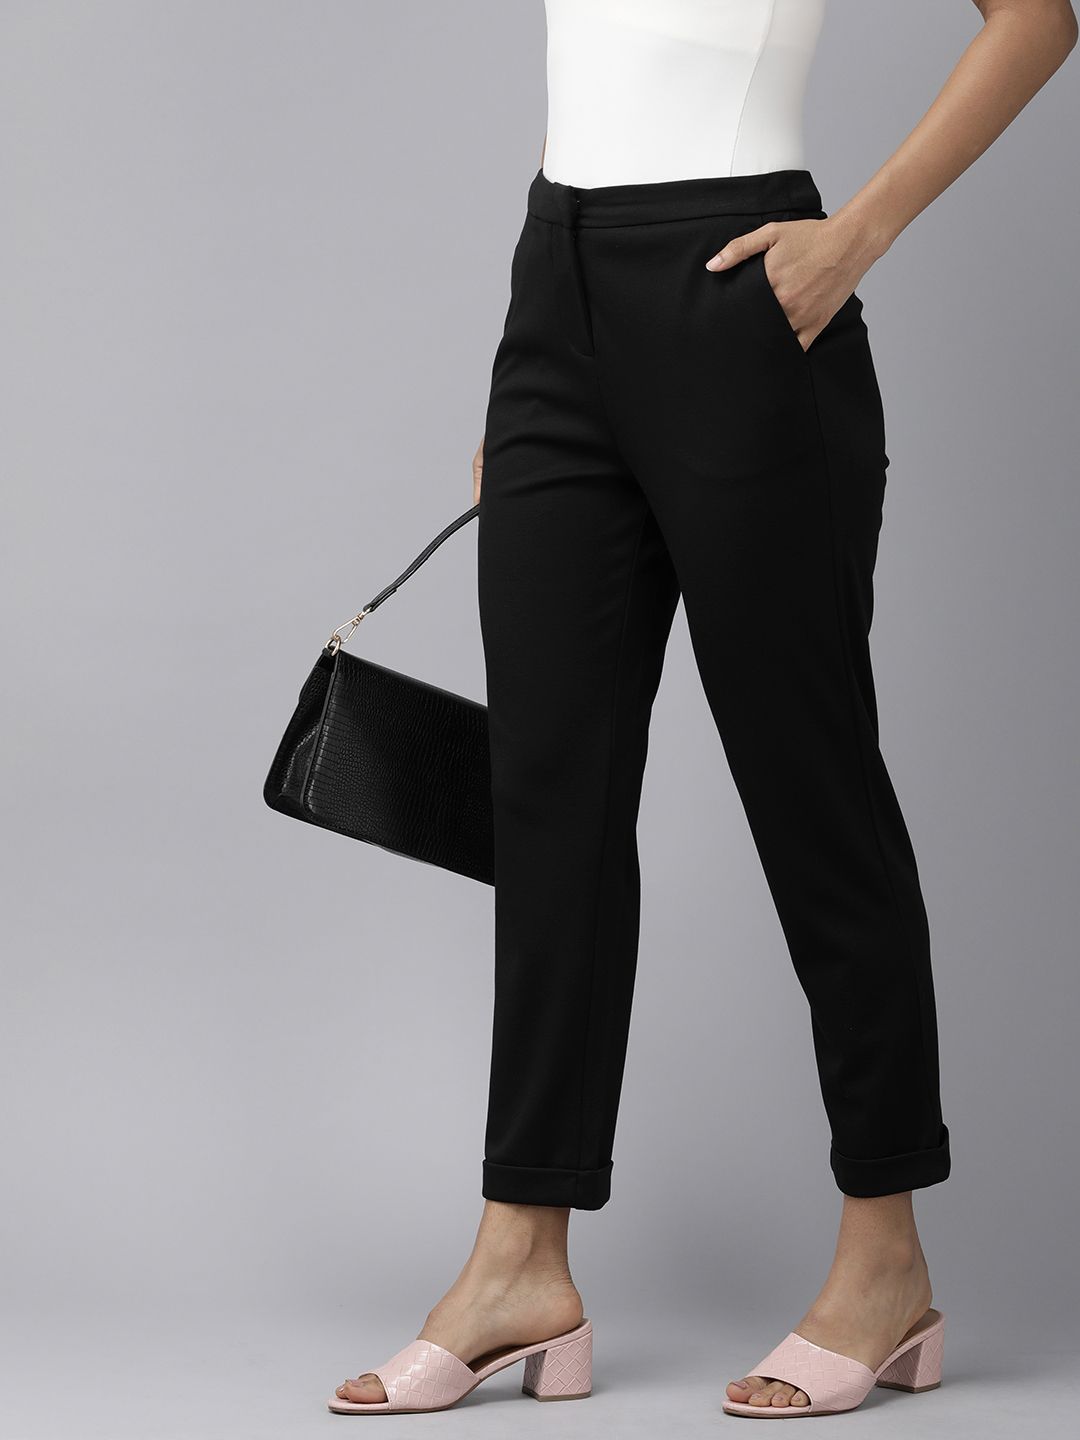 Van Heusen Woman Women Solid Flat Front Trousers Price in India